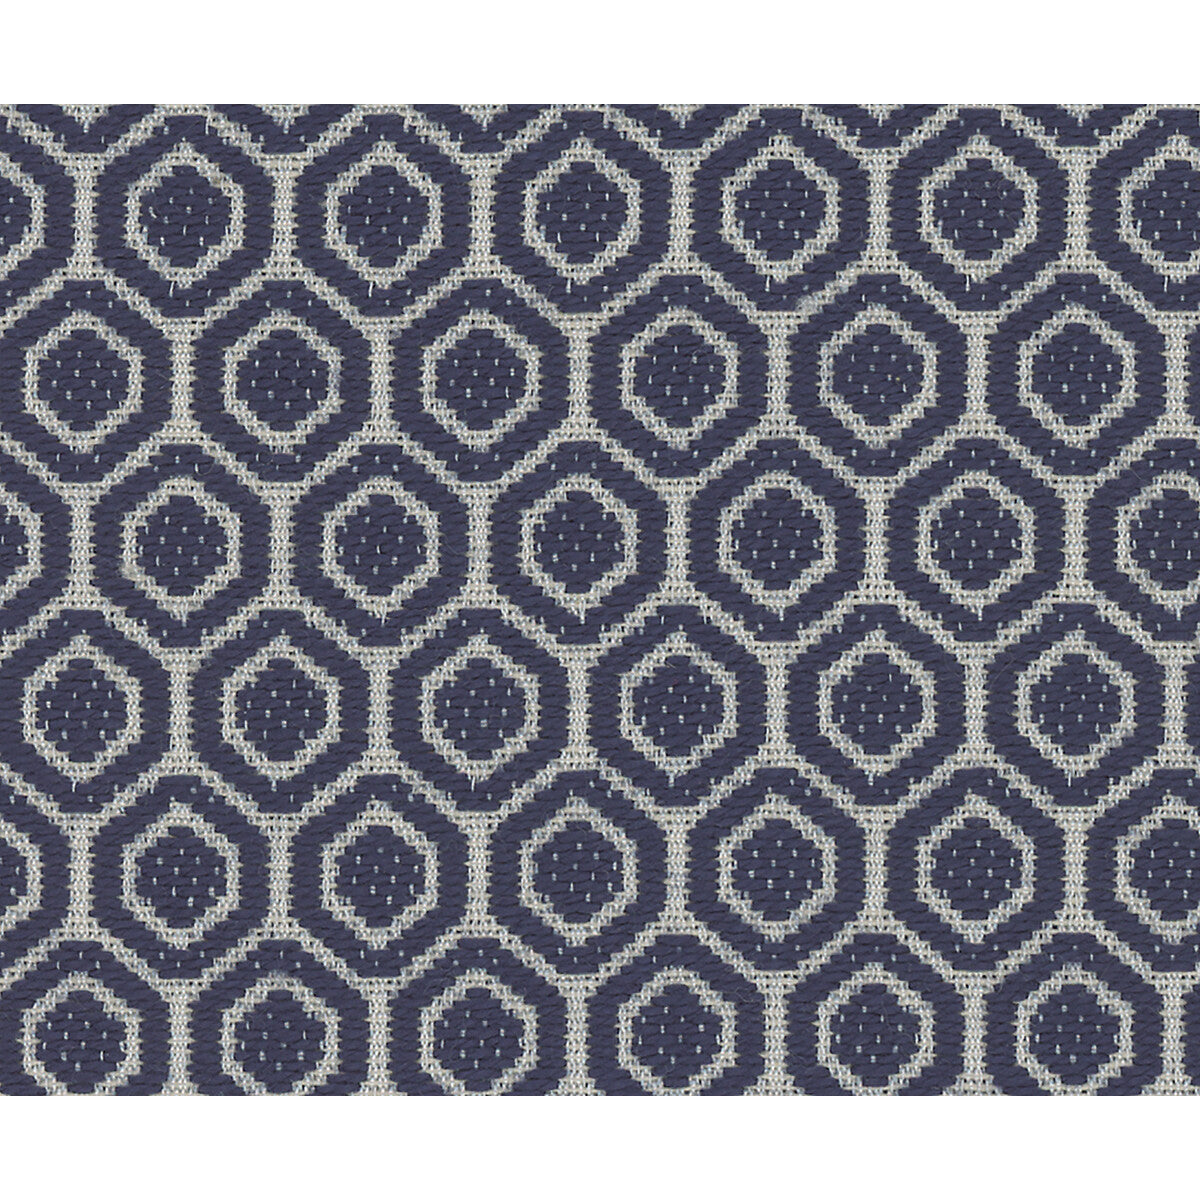 Kravet Smart fabric in 34480-50 color - pattern 34480.50.0 - by Kravet Smart